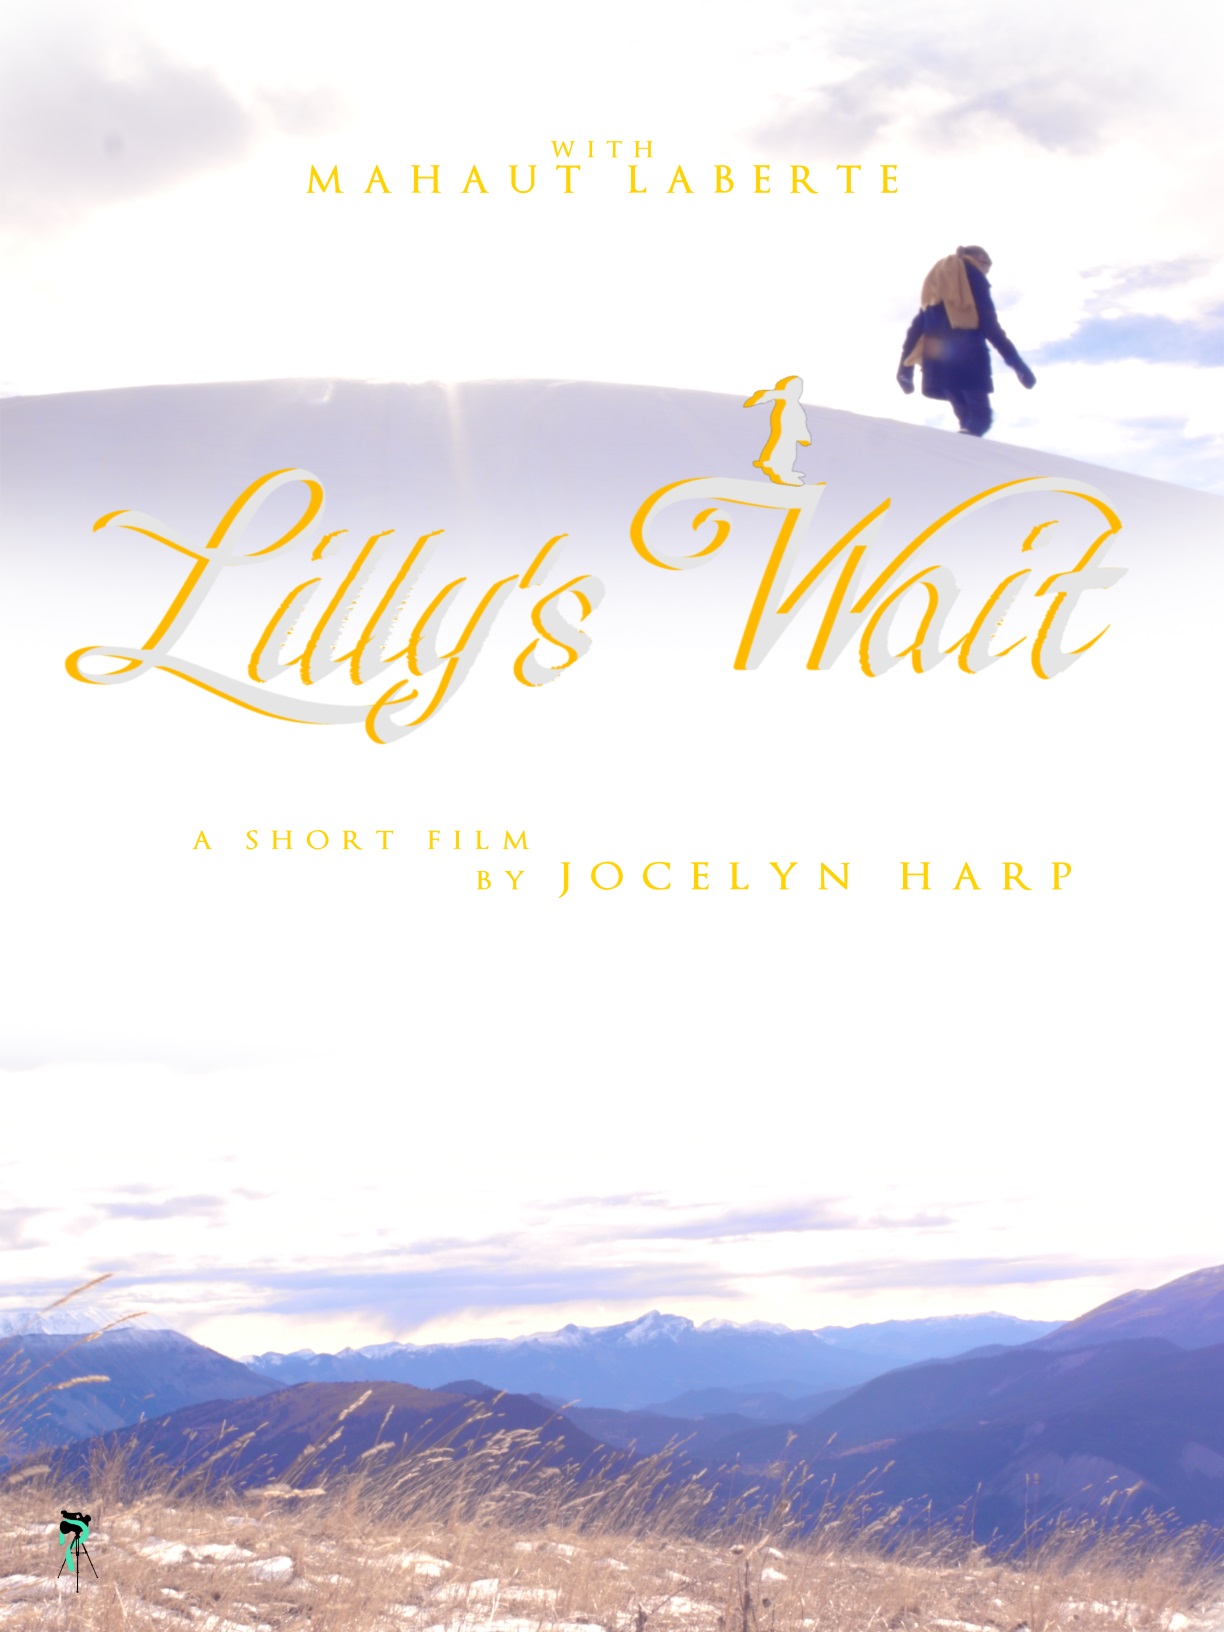 Lilly's Wait